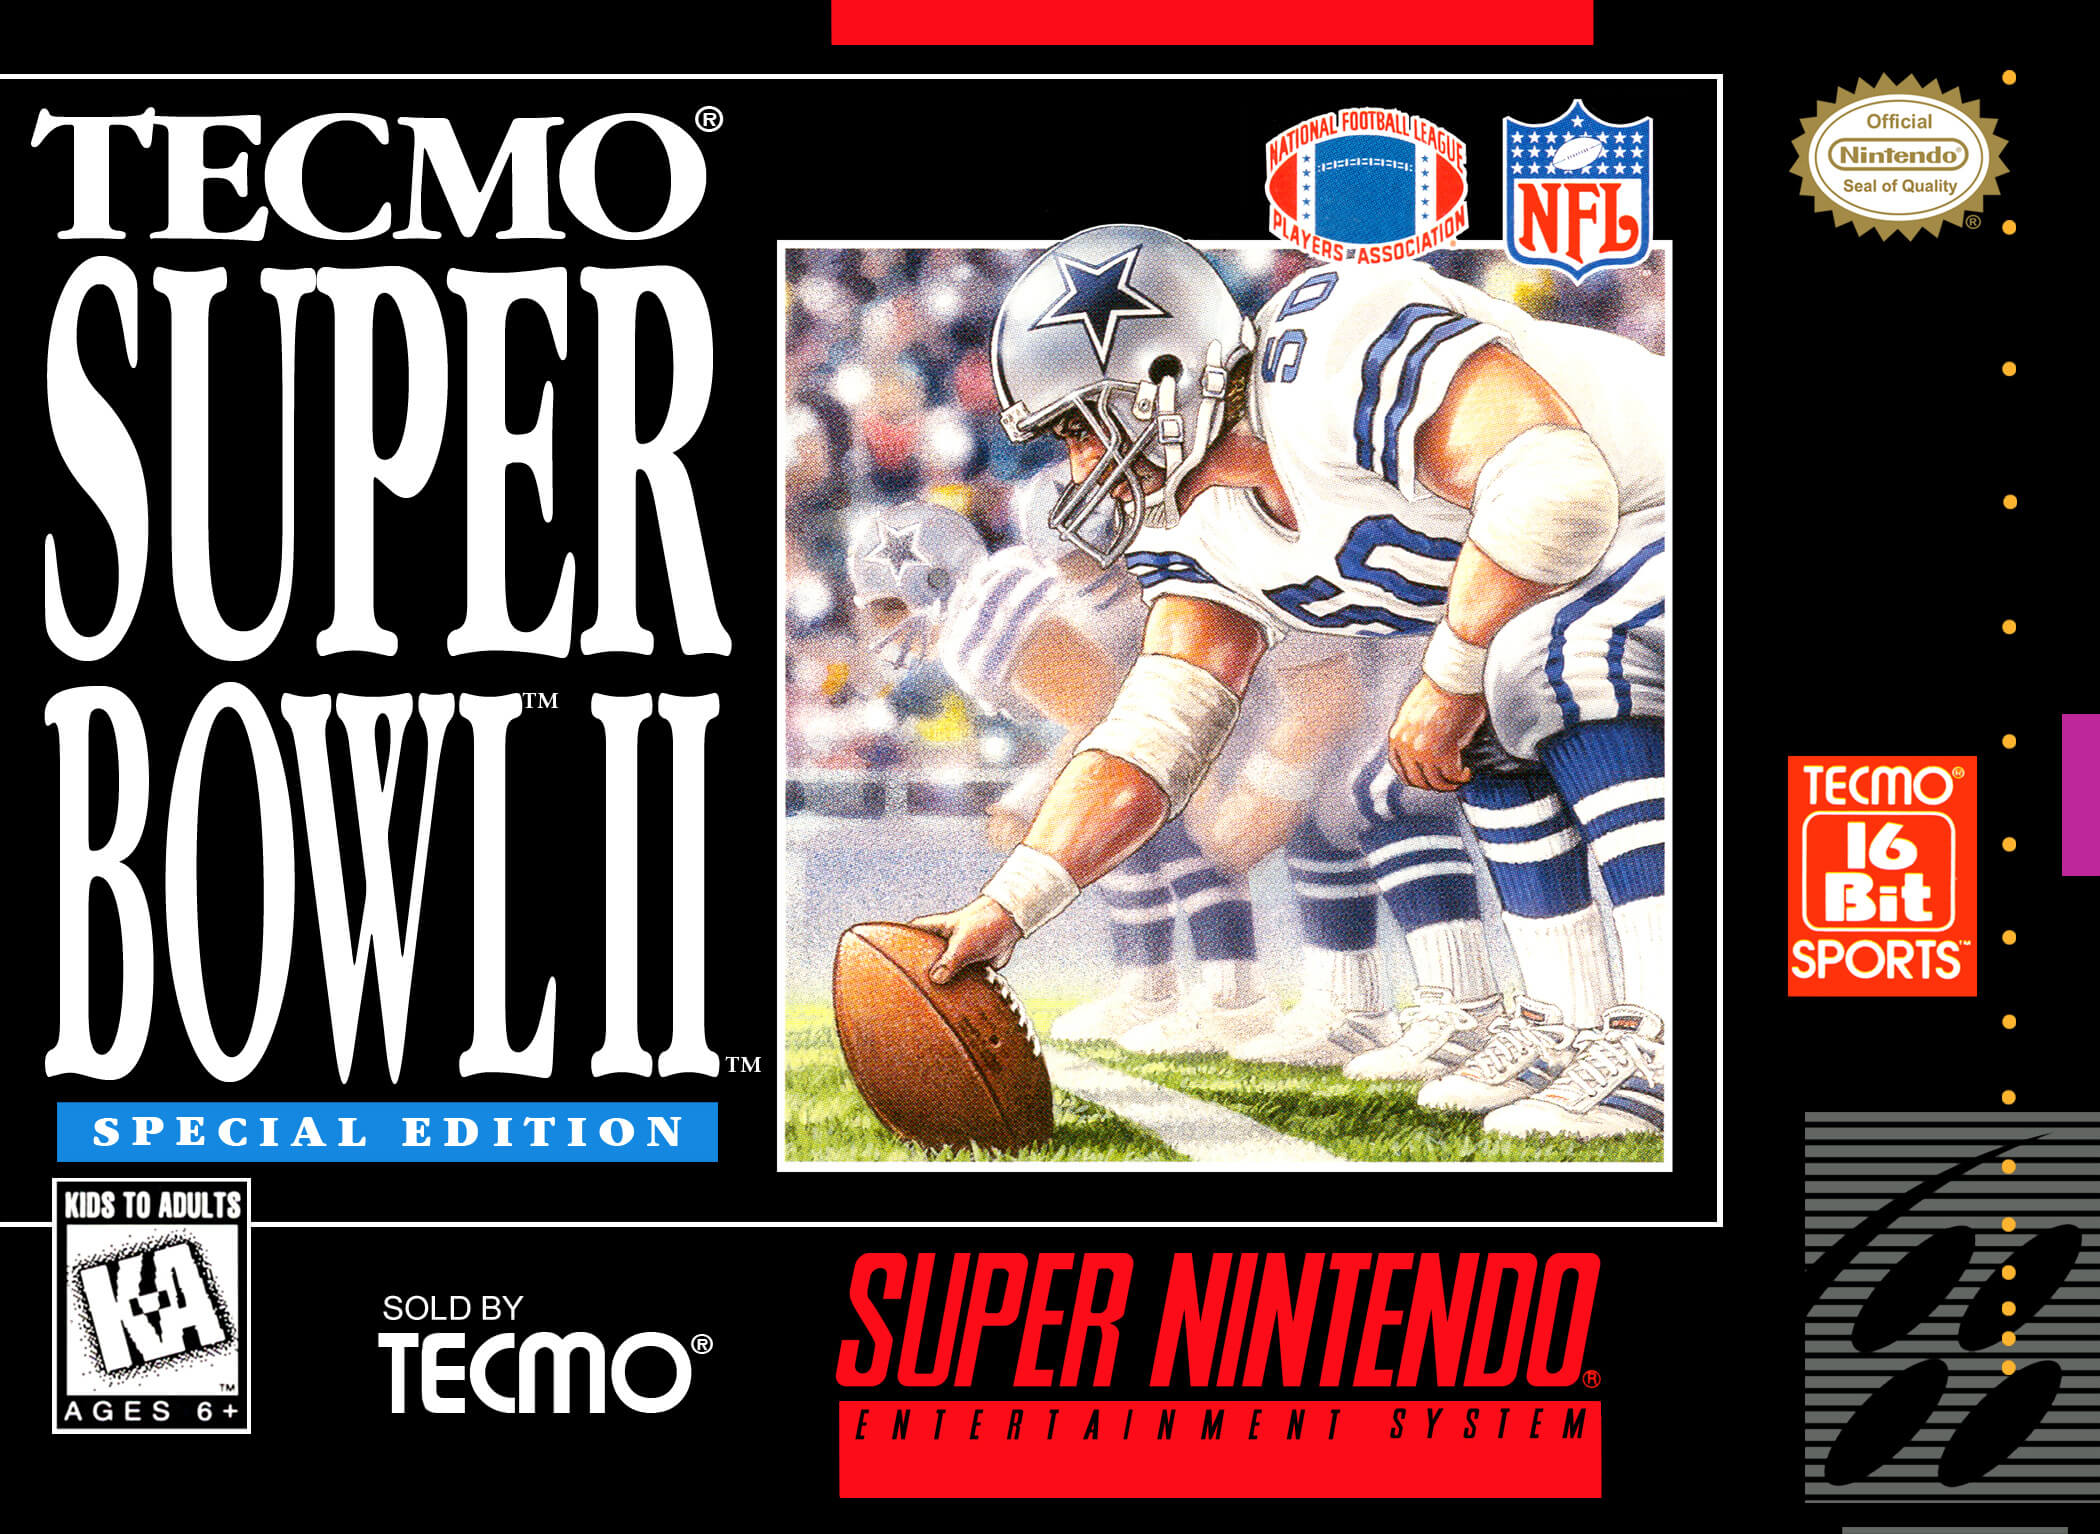 Tecmo Super Bowl Ii Special Edition Nintendo Snes Rom Download